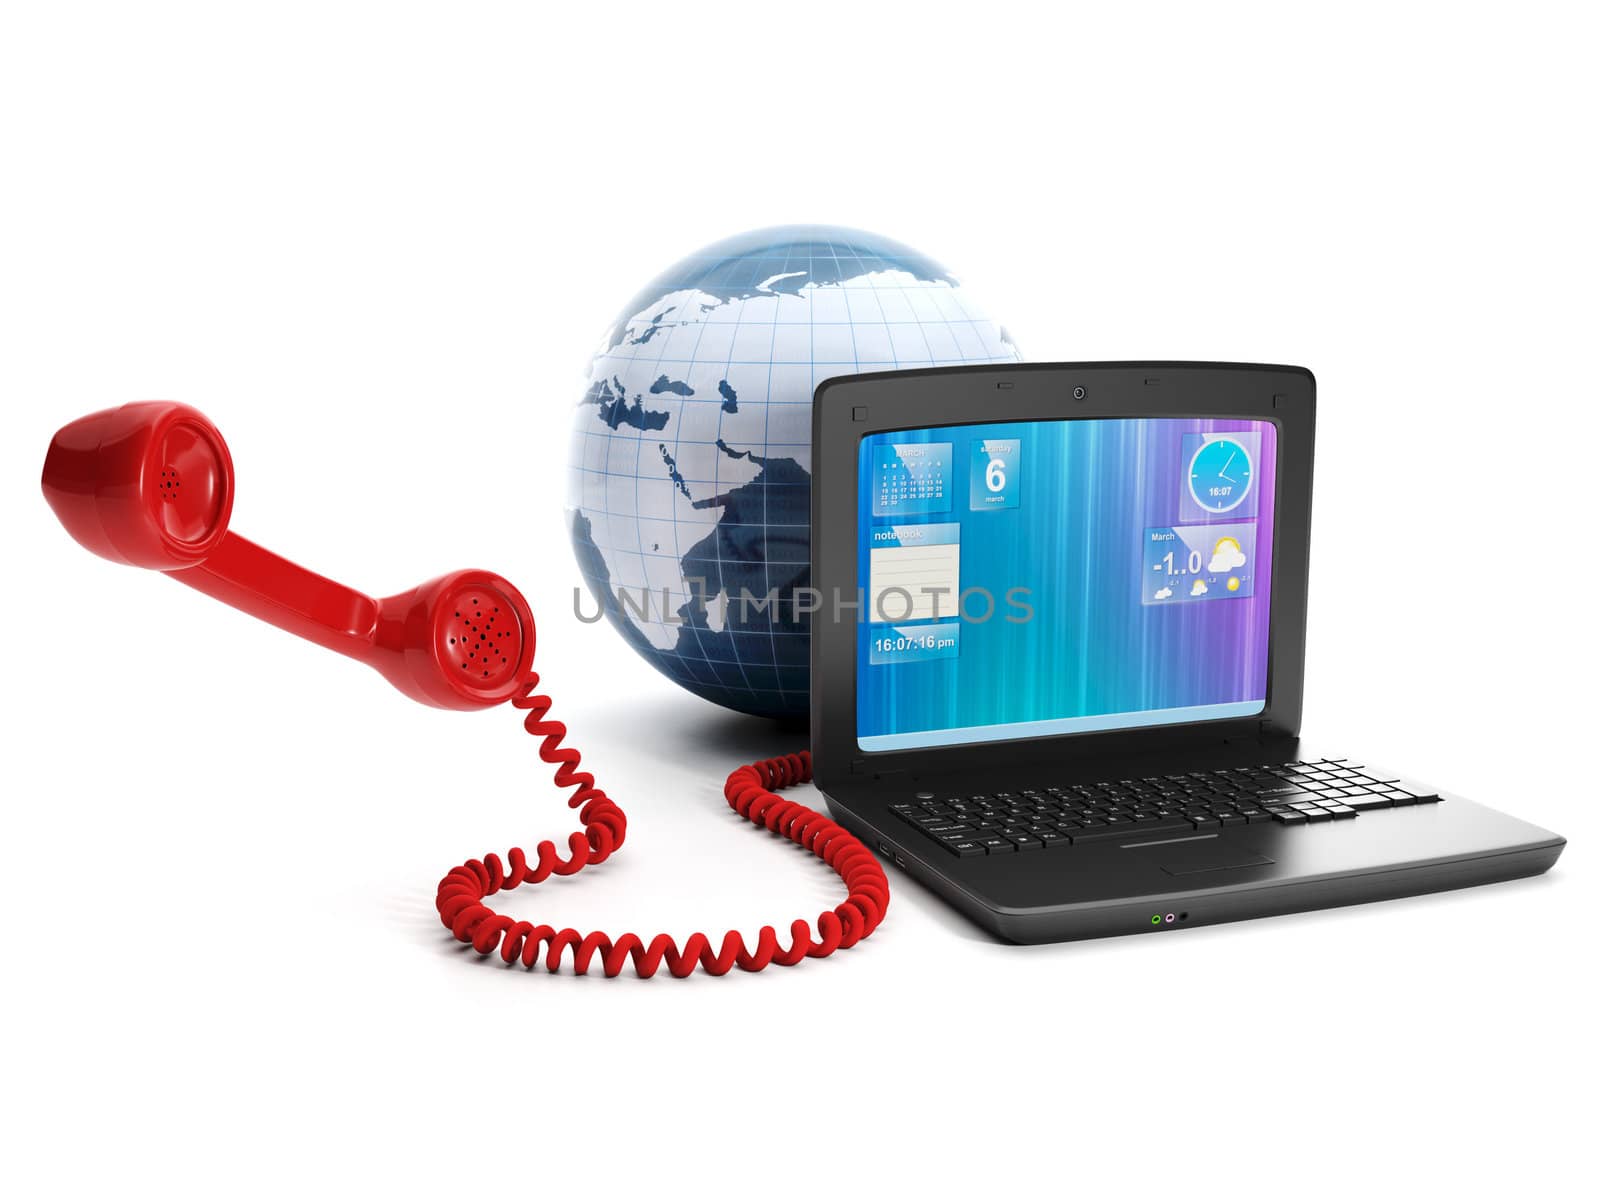 Calls via the internet to fall in love place on earth. Laptop la by kolobsek